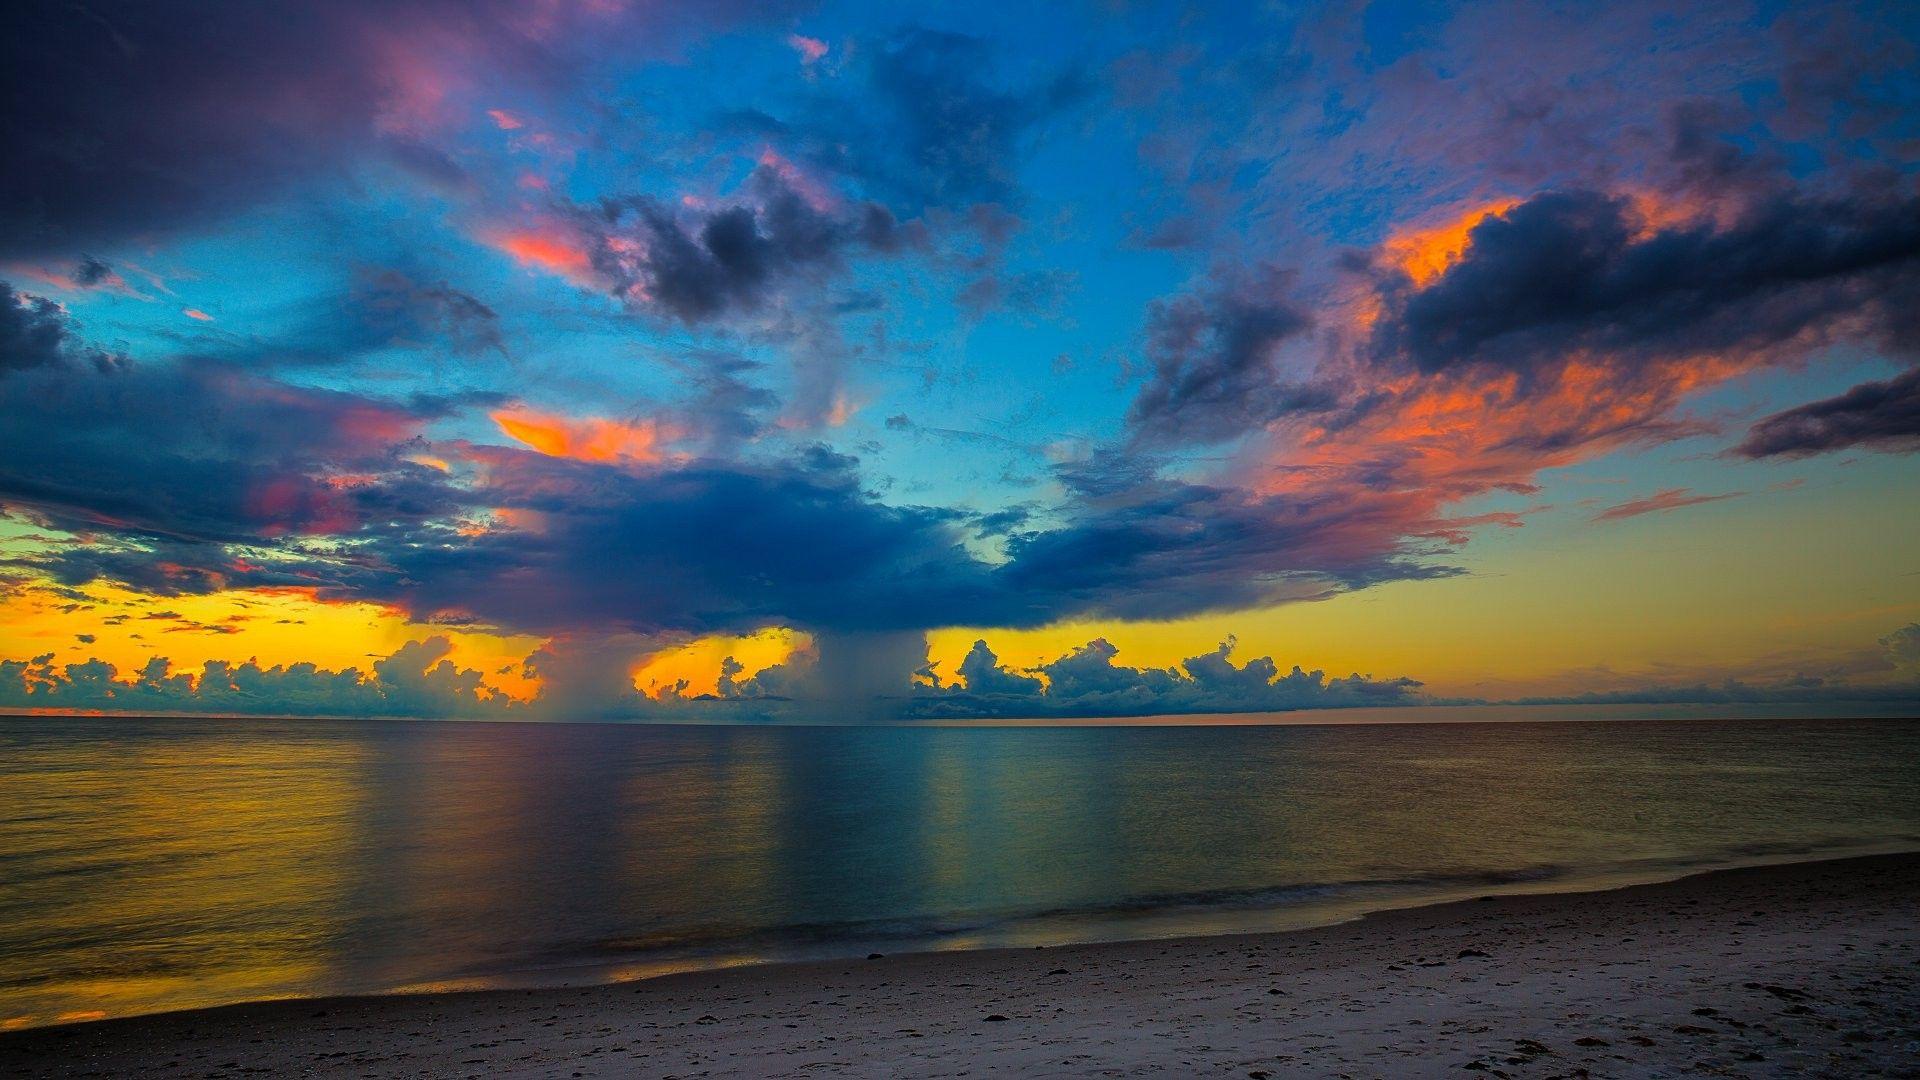 Florida Beach Sunset Wallpapers Top Free Florida Beach Sunset